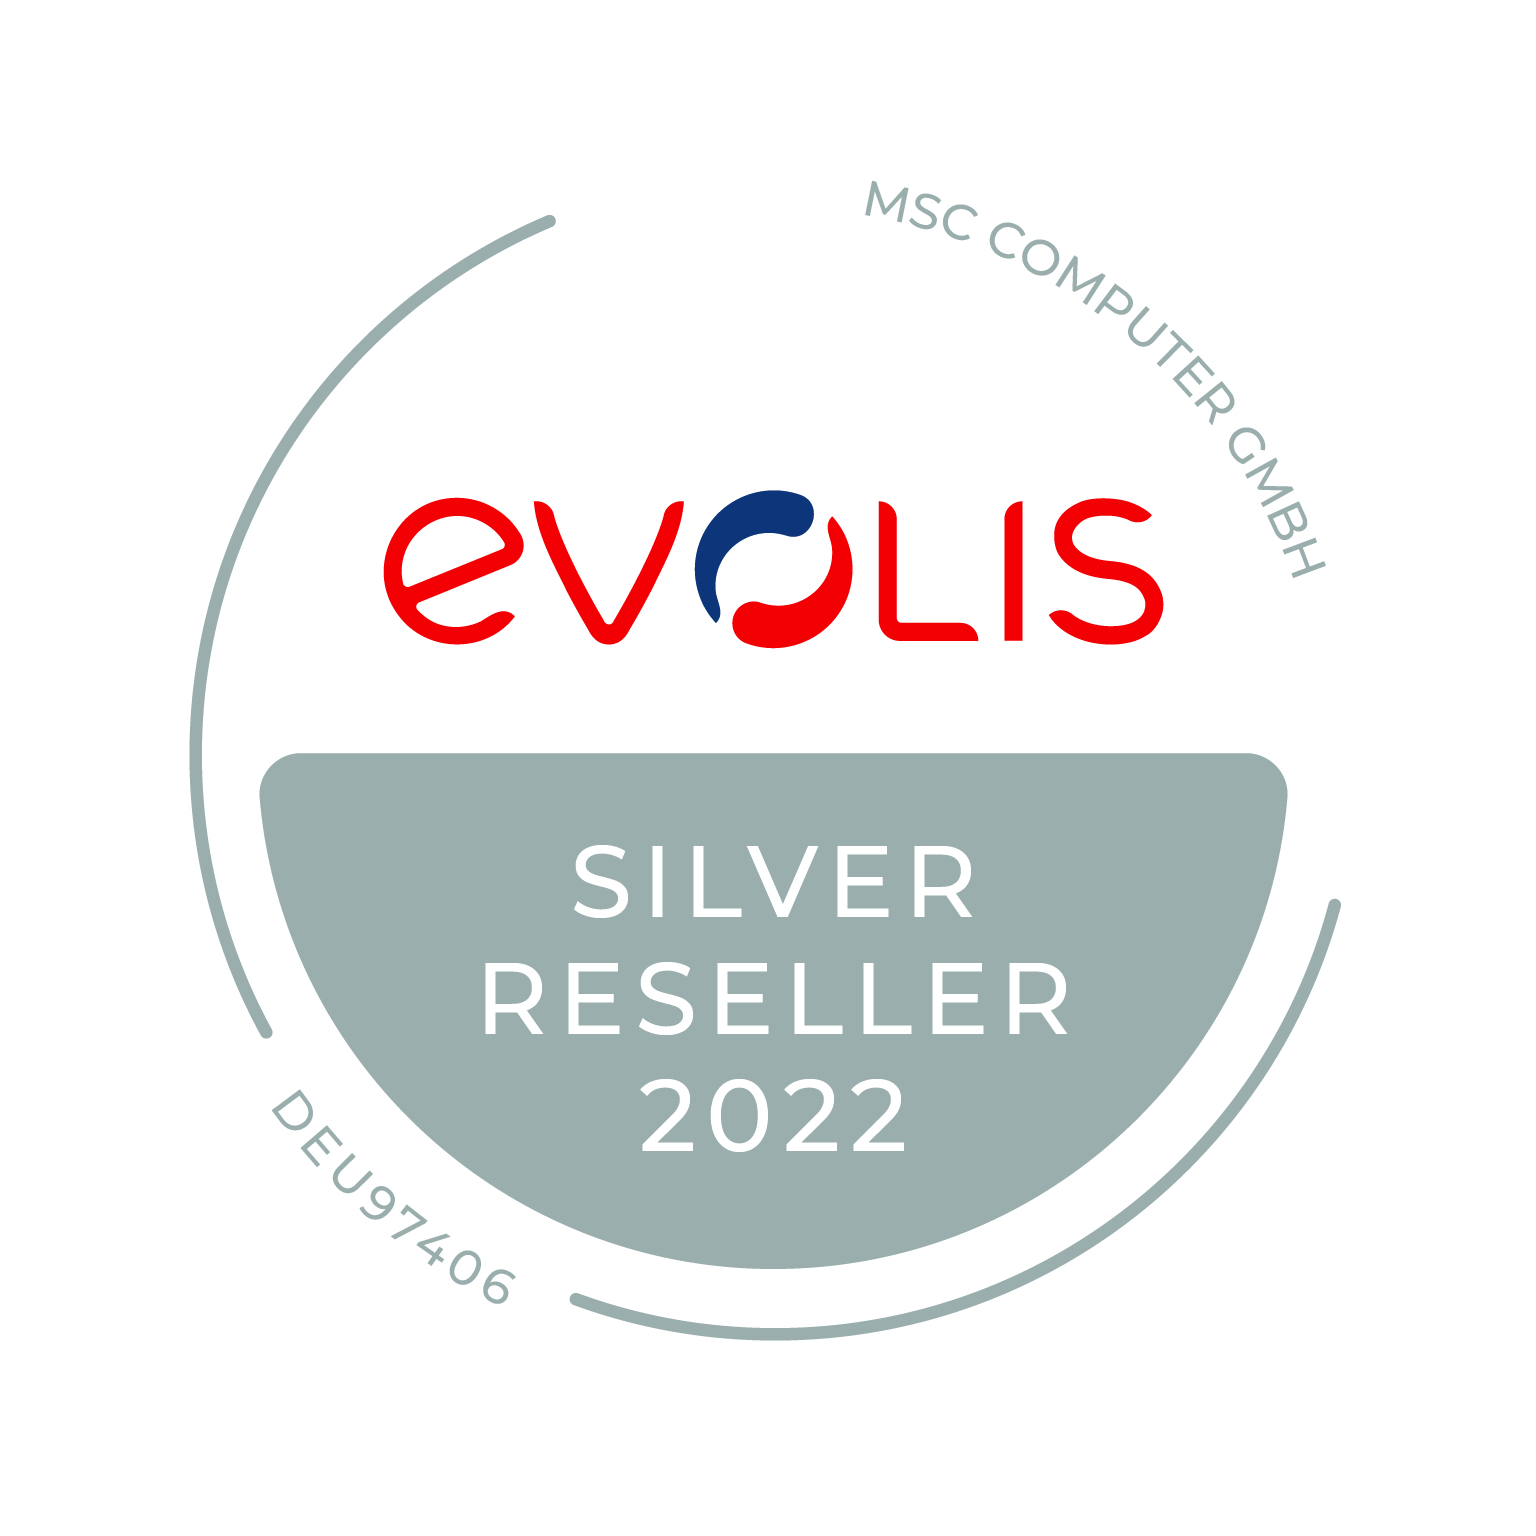 MSC Computer Silver Reseller Evolis Red Program